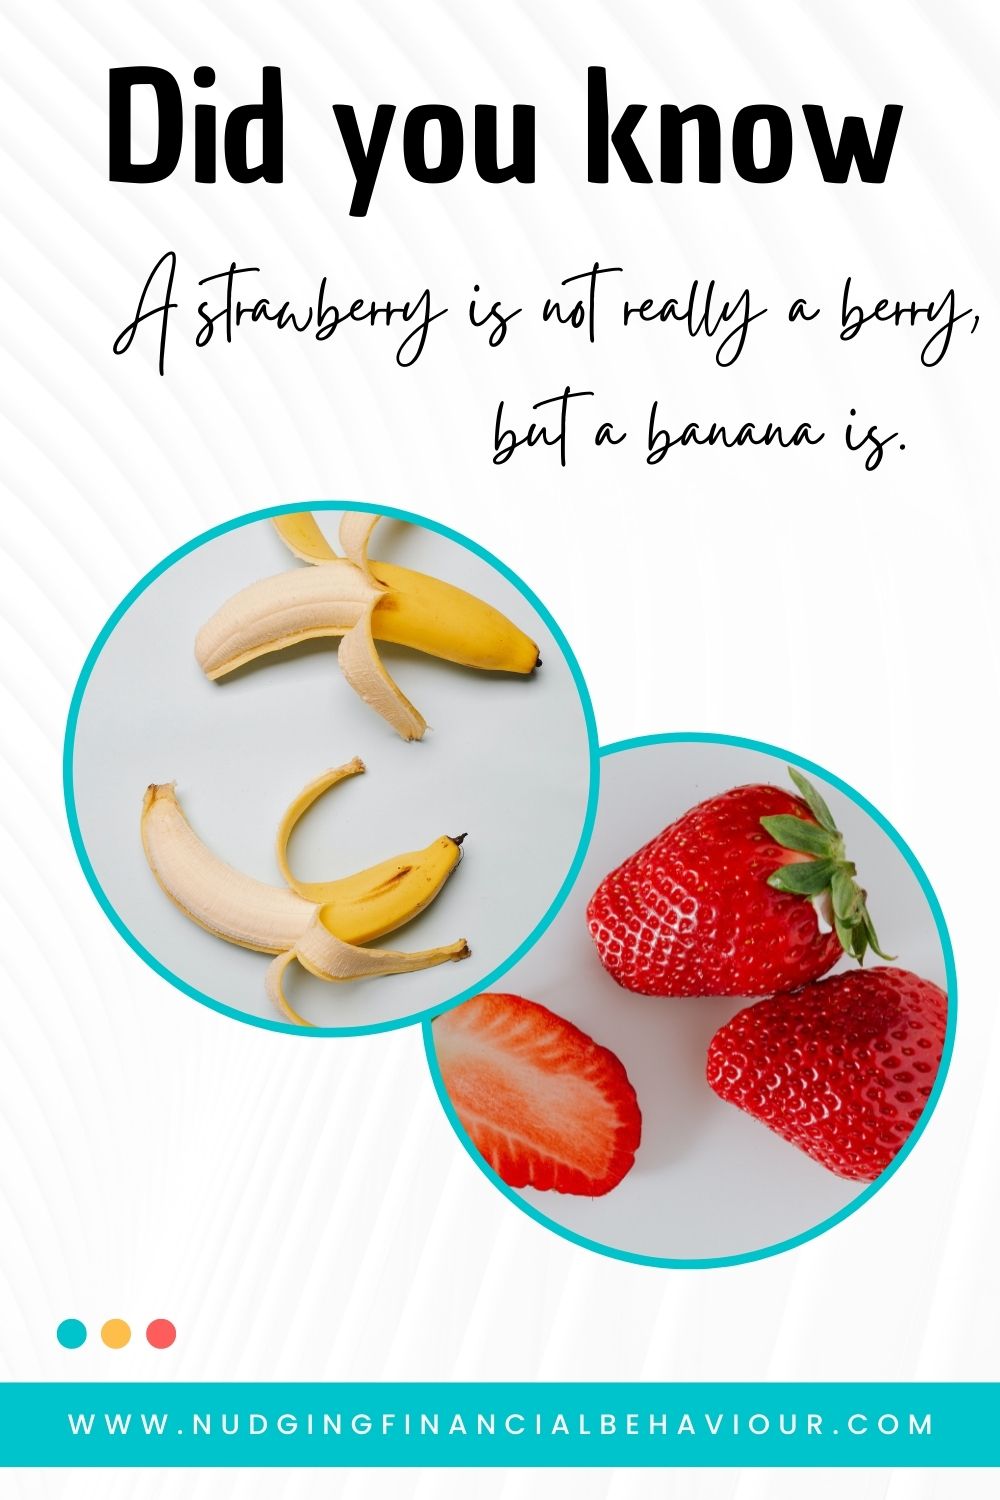 Strawberry and banana